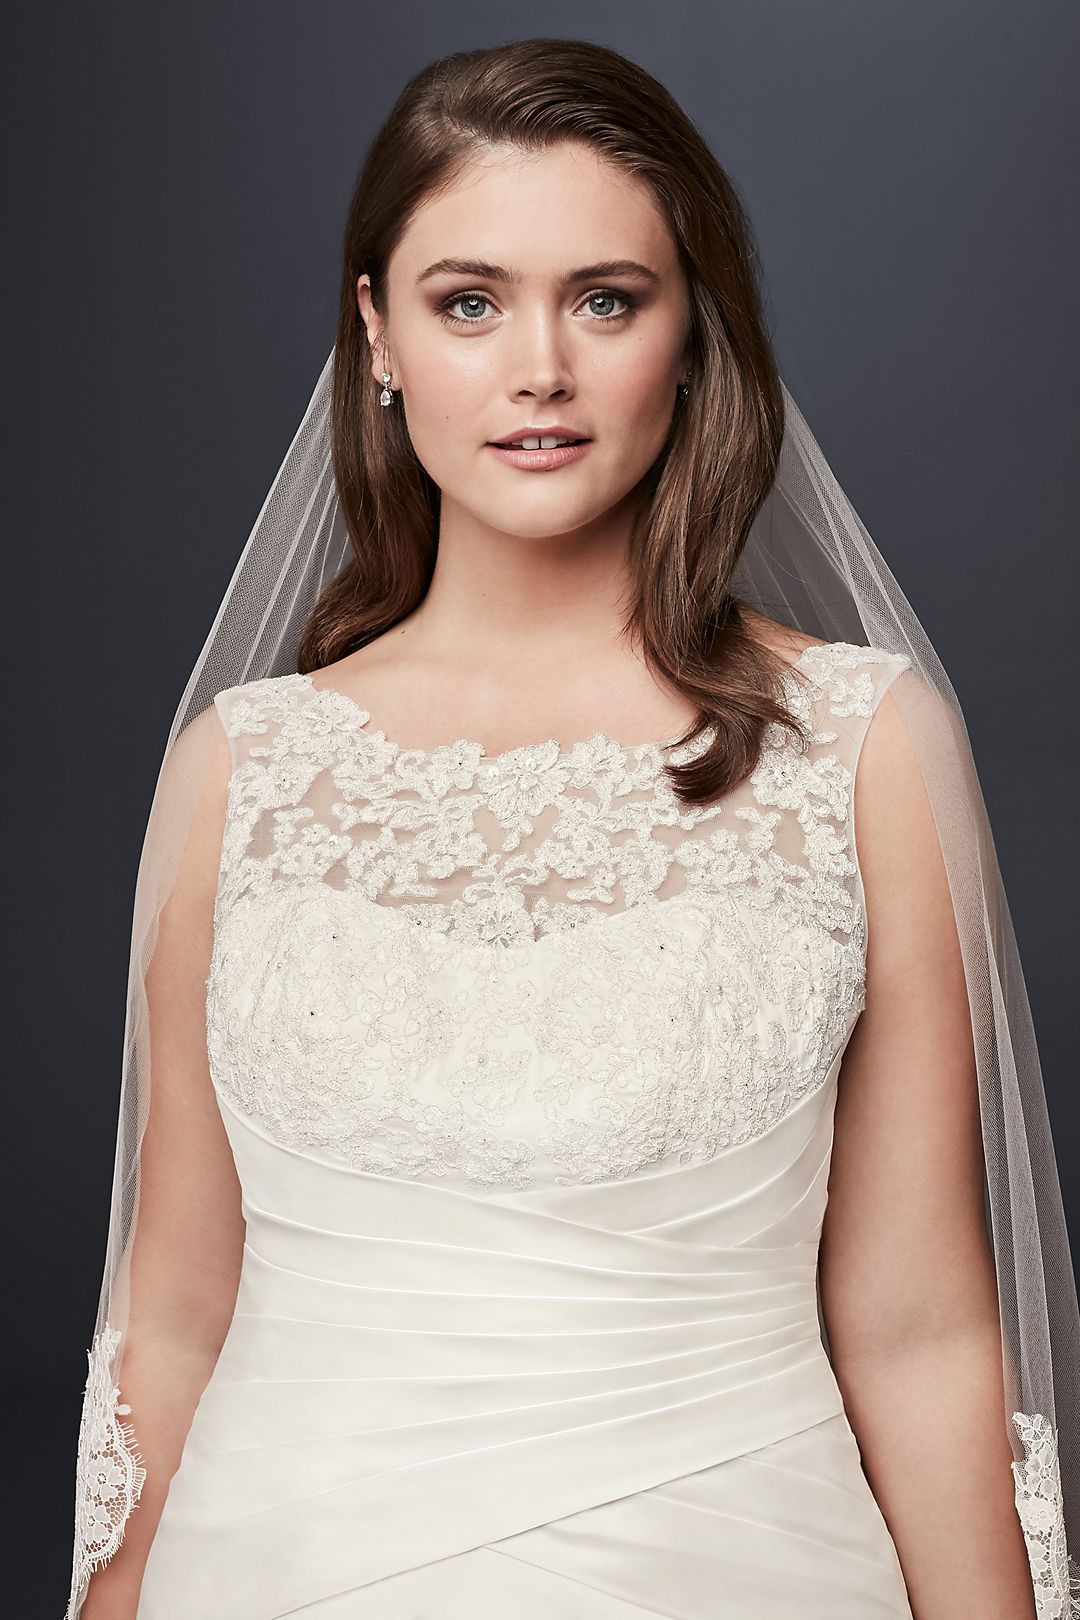 Illusion Lace and Taffeta Plus Size Wedding Dress Image 4